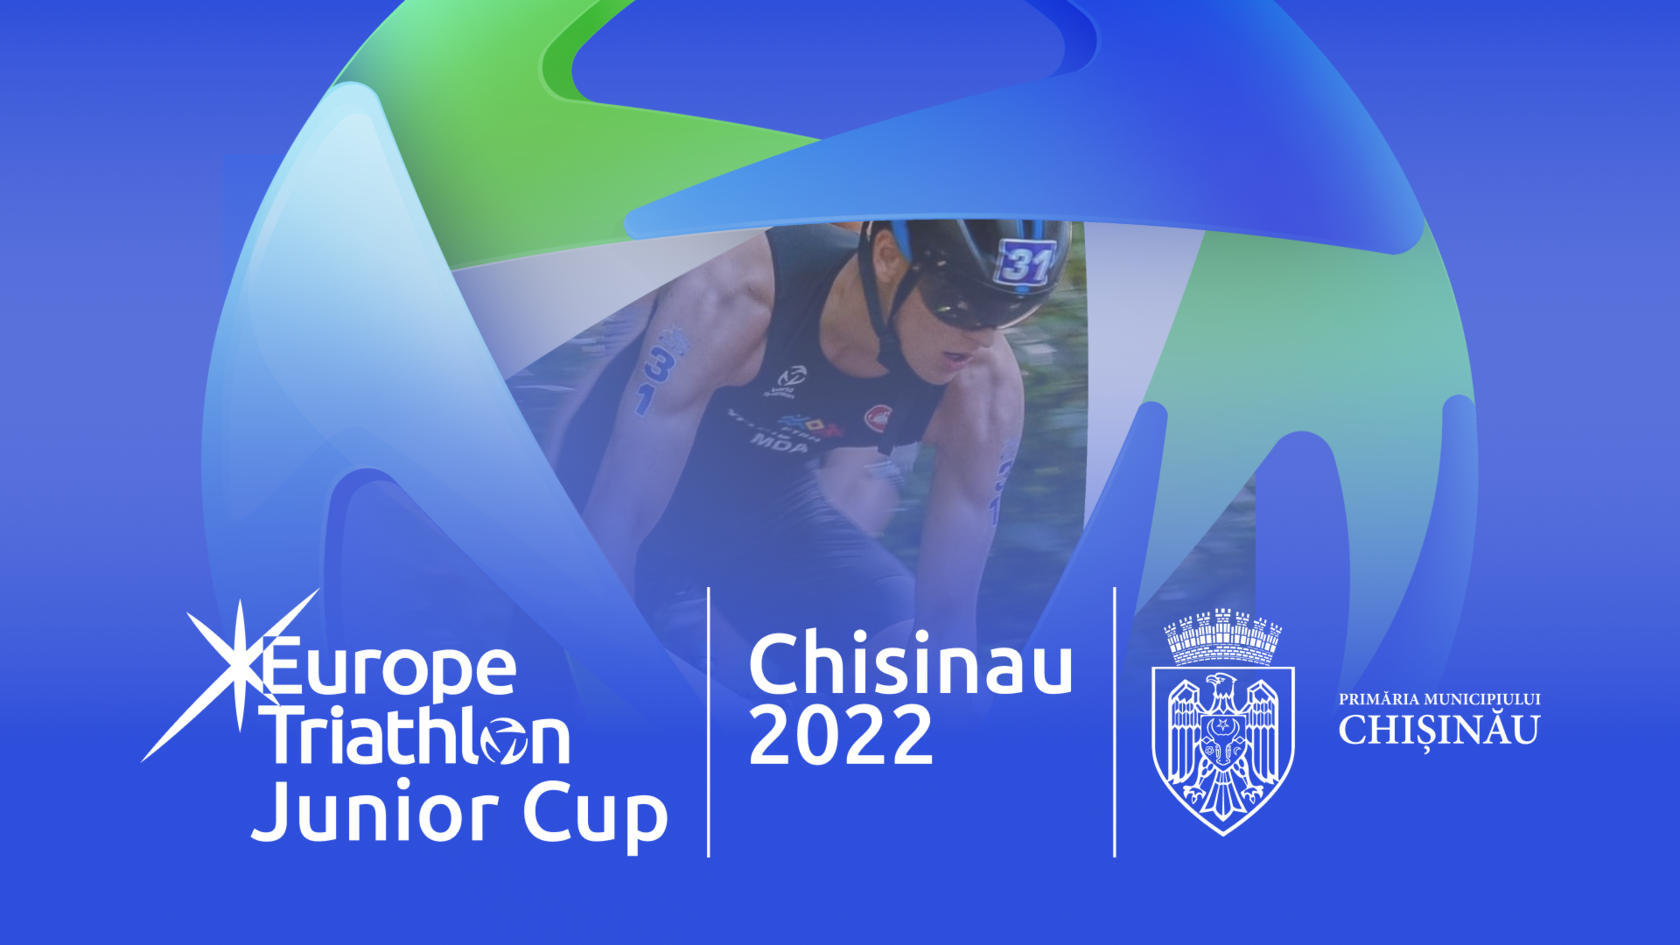 Европа юниор. Triathlon Junior. World Scholars Cup Chisinau 2022. World Scholars Cup Chisinau.